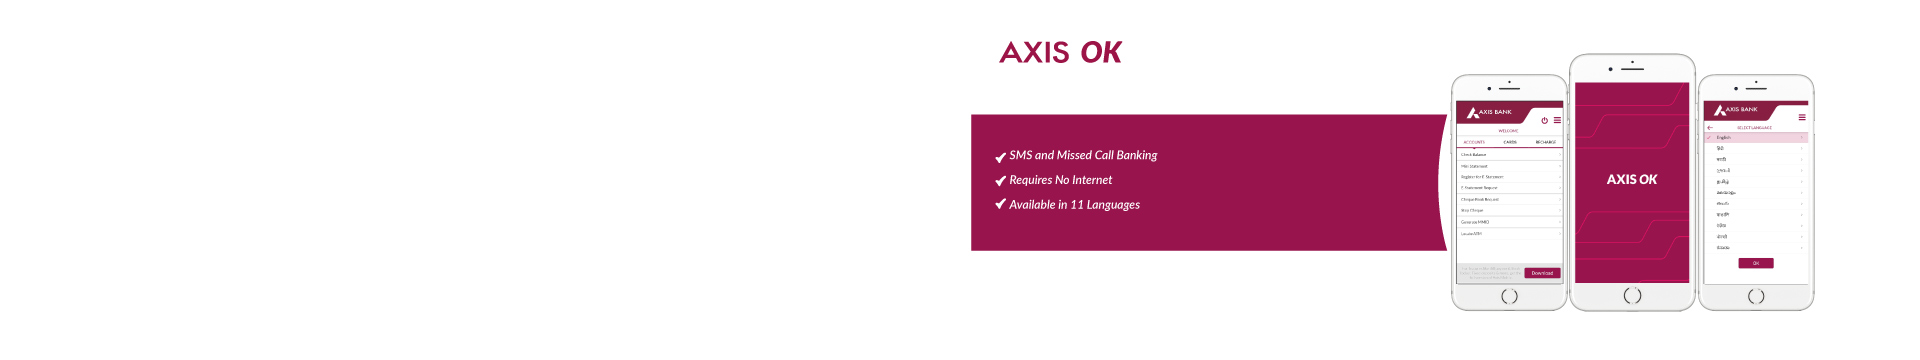 Axis OK Banner